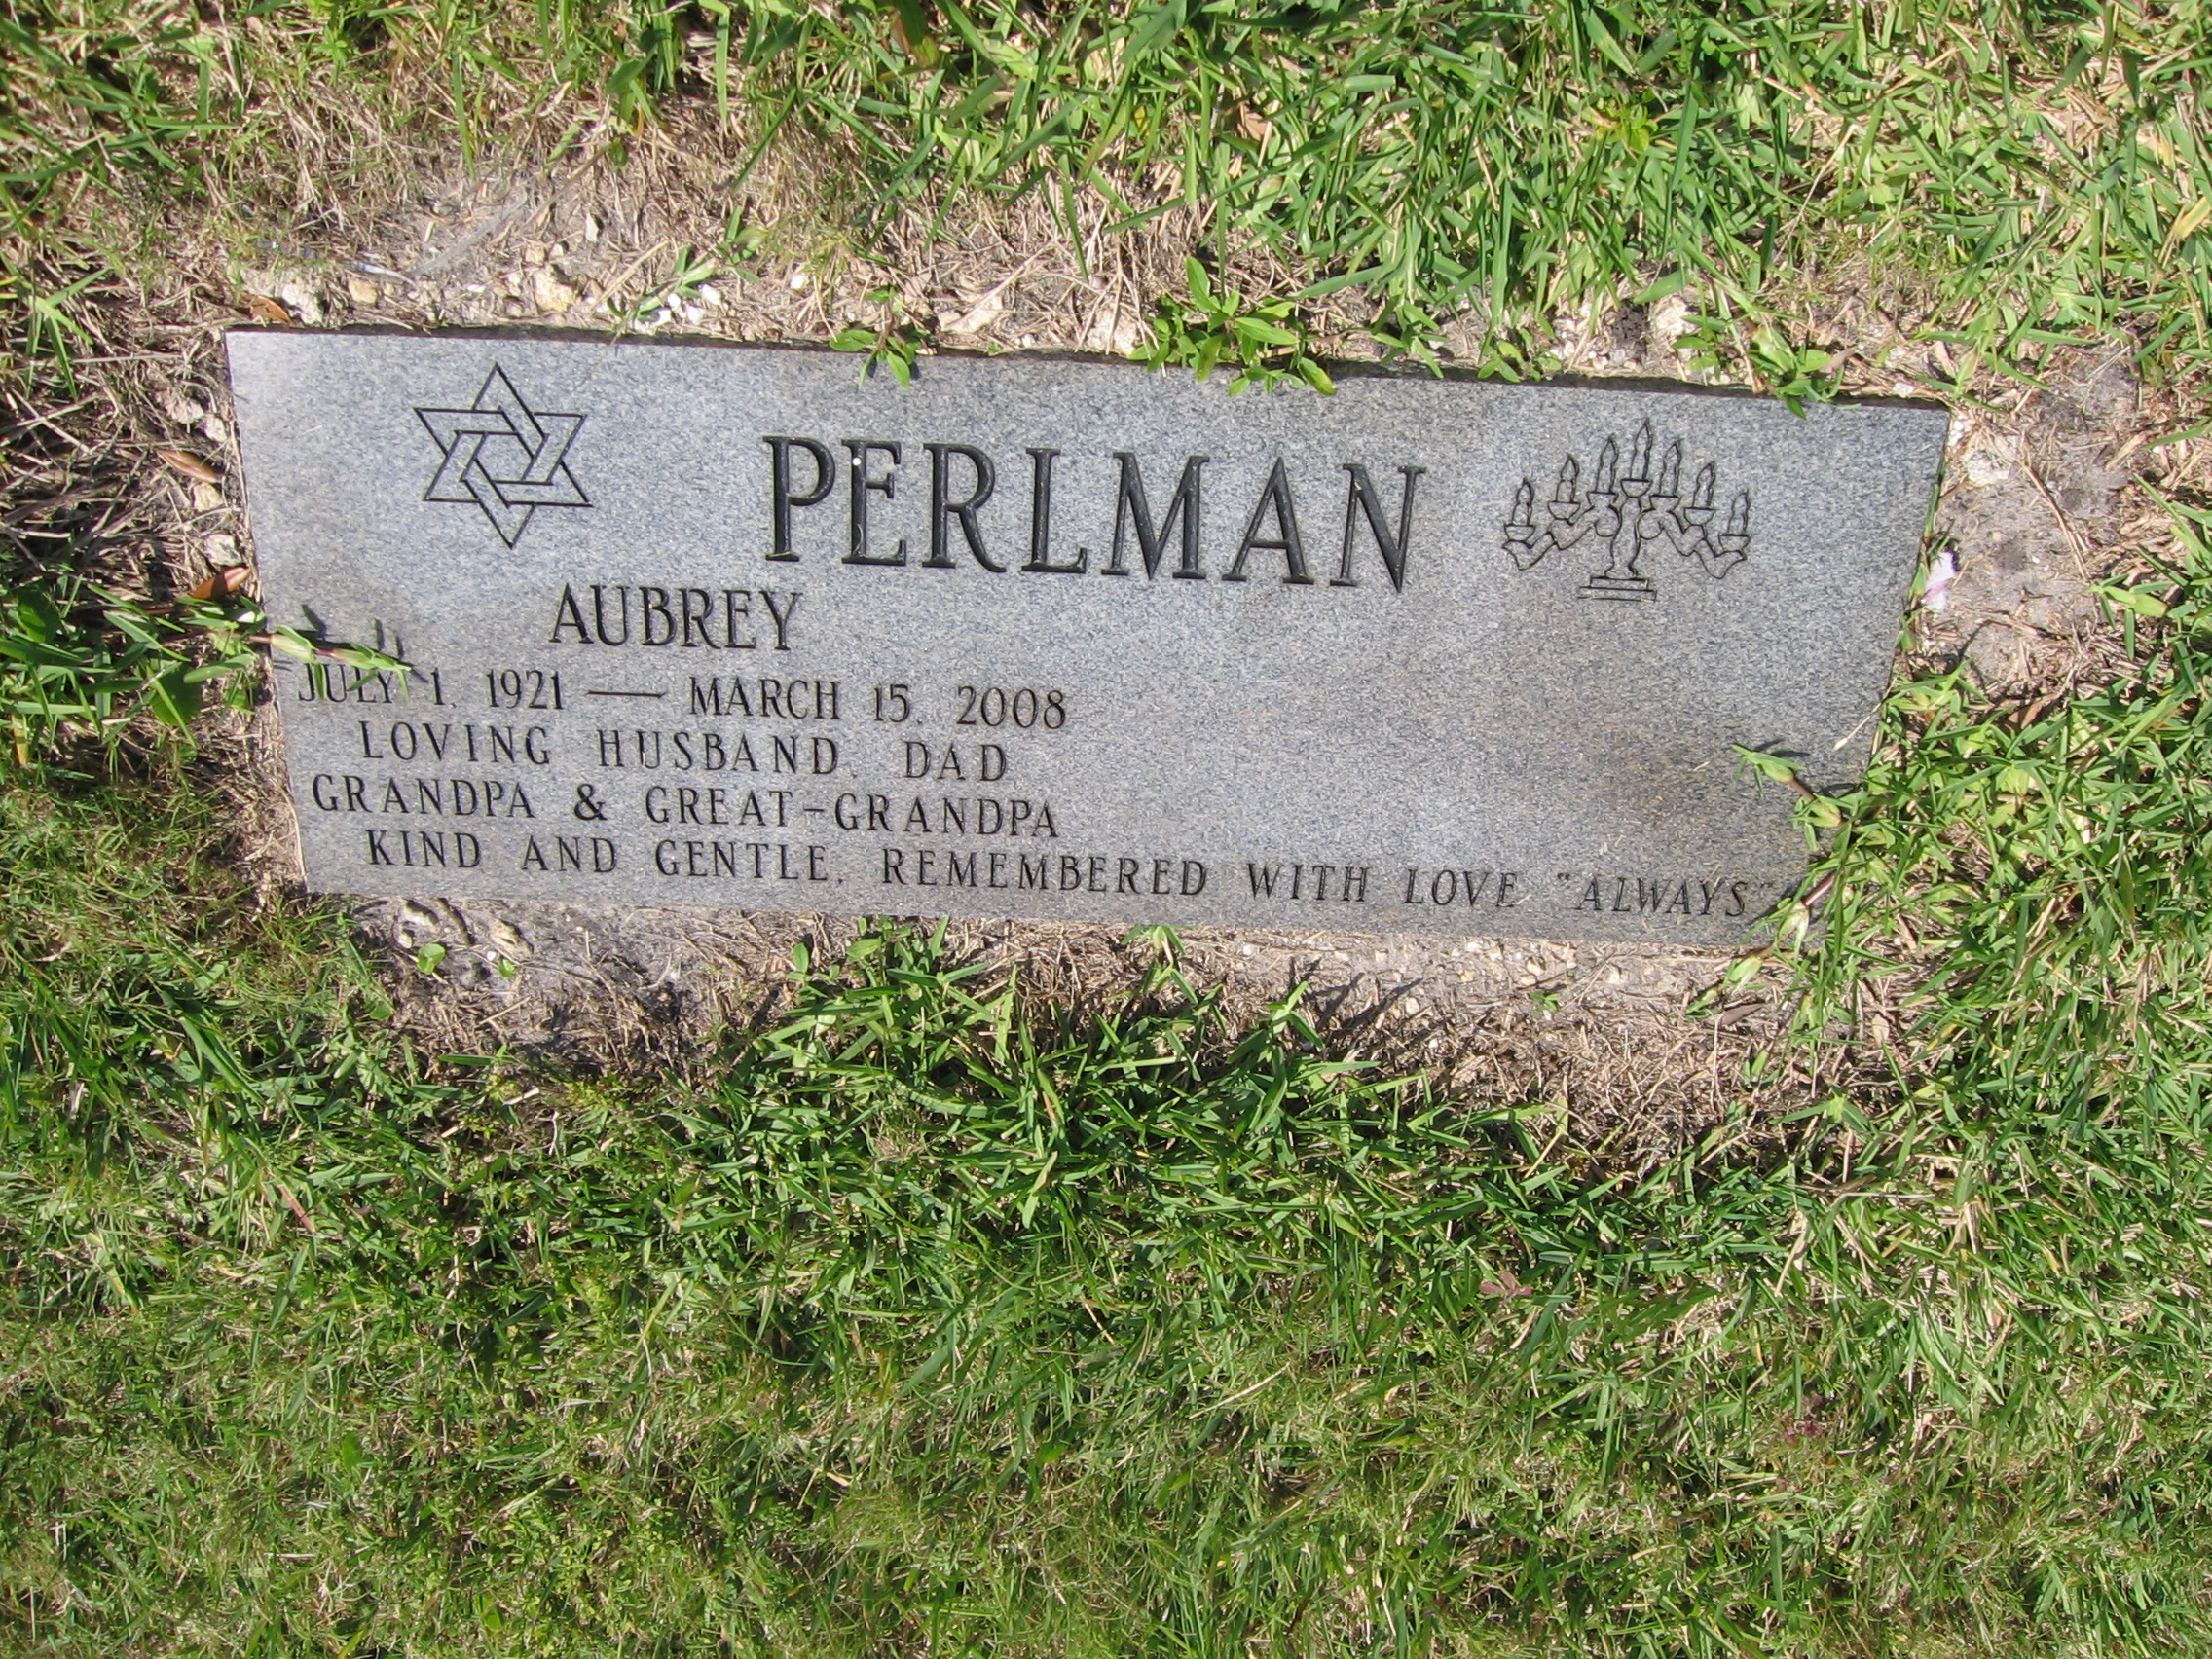 Aubrey Perlman